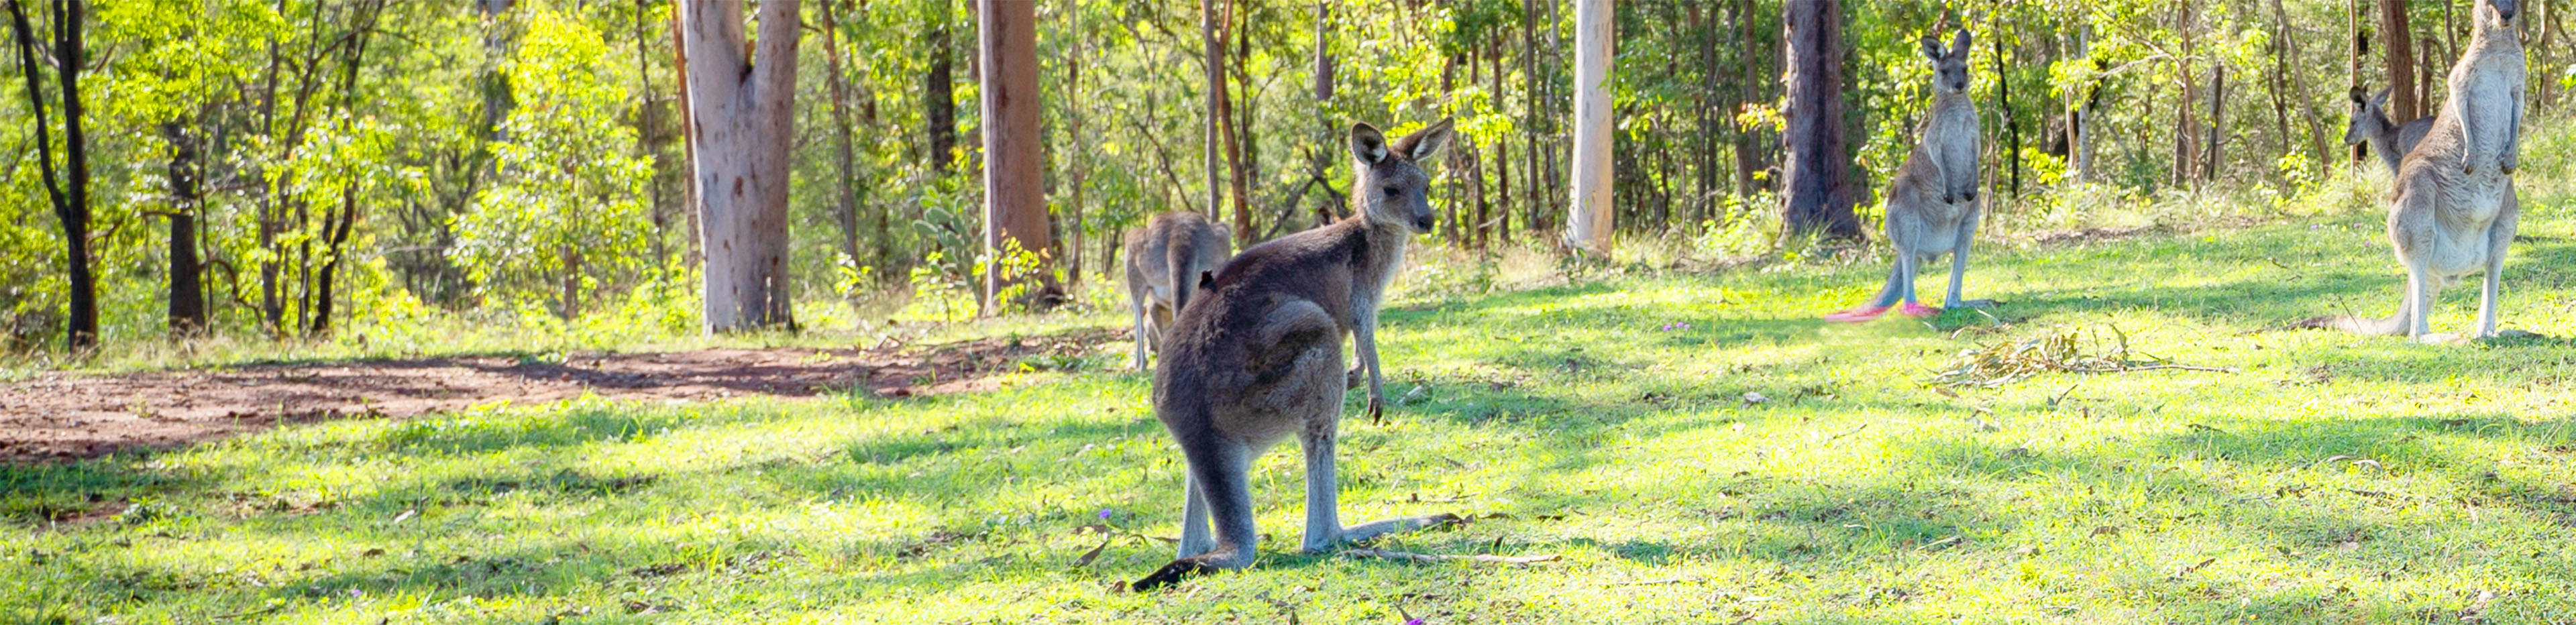 kangaroo in field